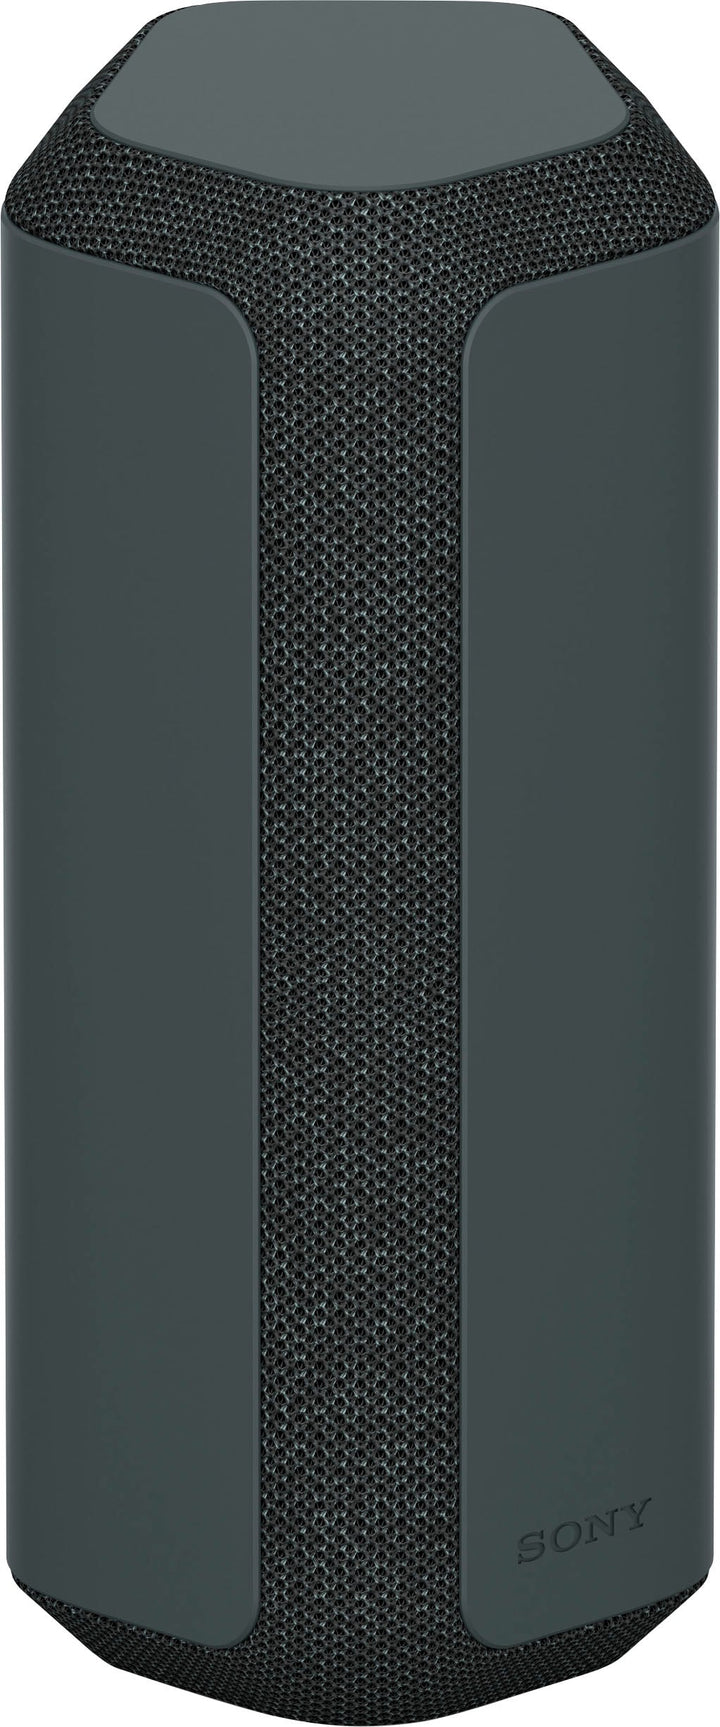 Sony - XE300 Portable X-Series Bluetooth Speaker - Black_1